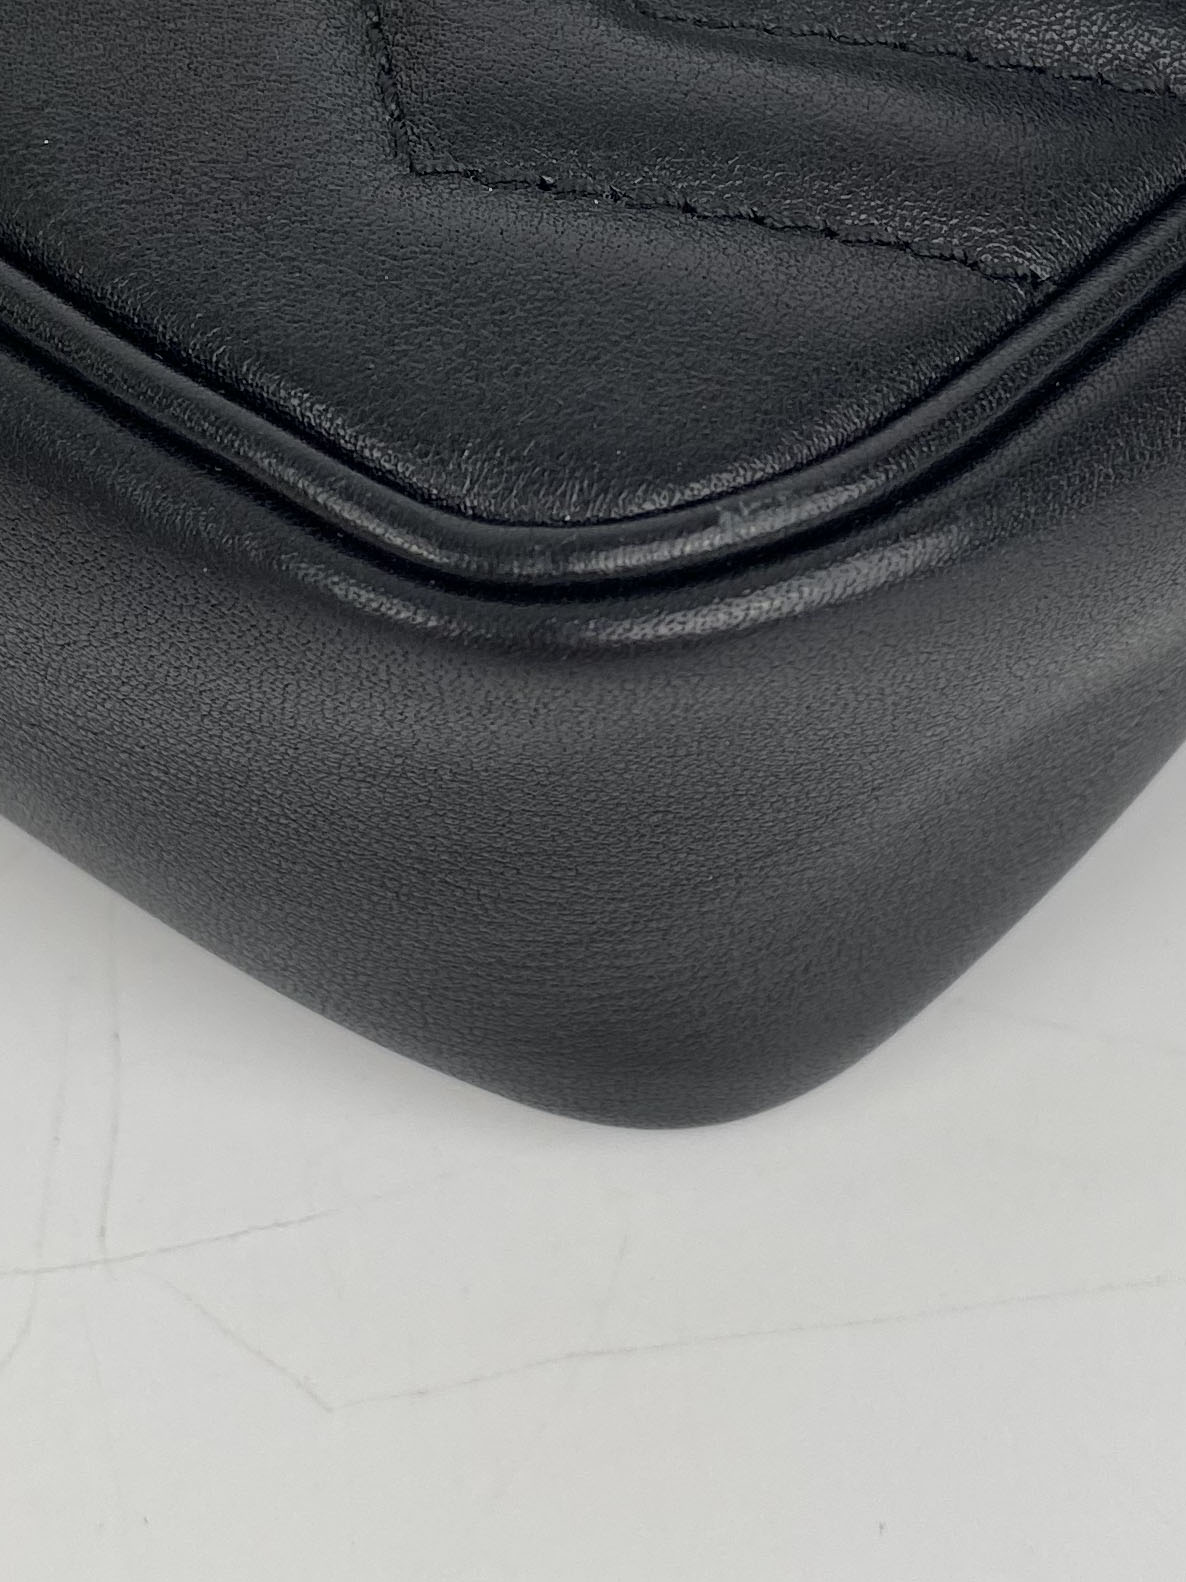 Gucci Black Super Mini Marmont Bag